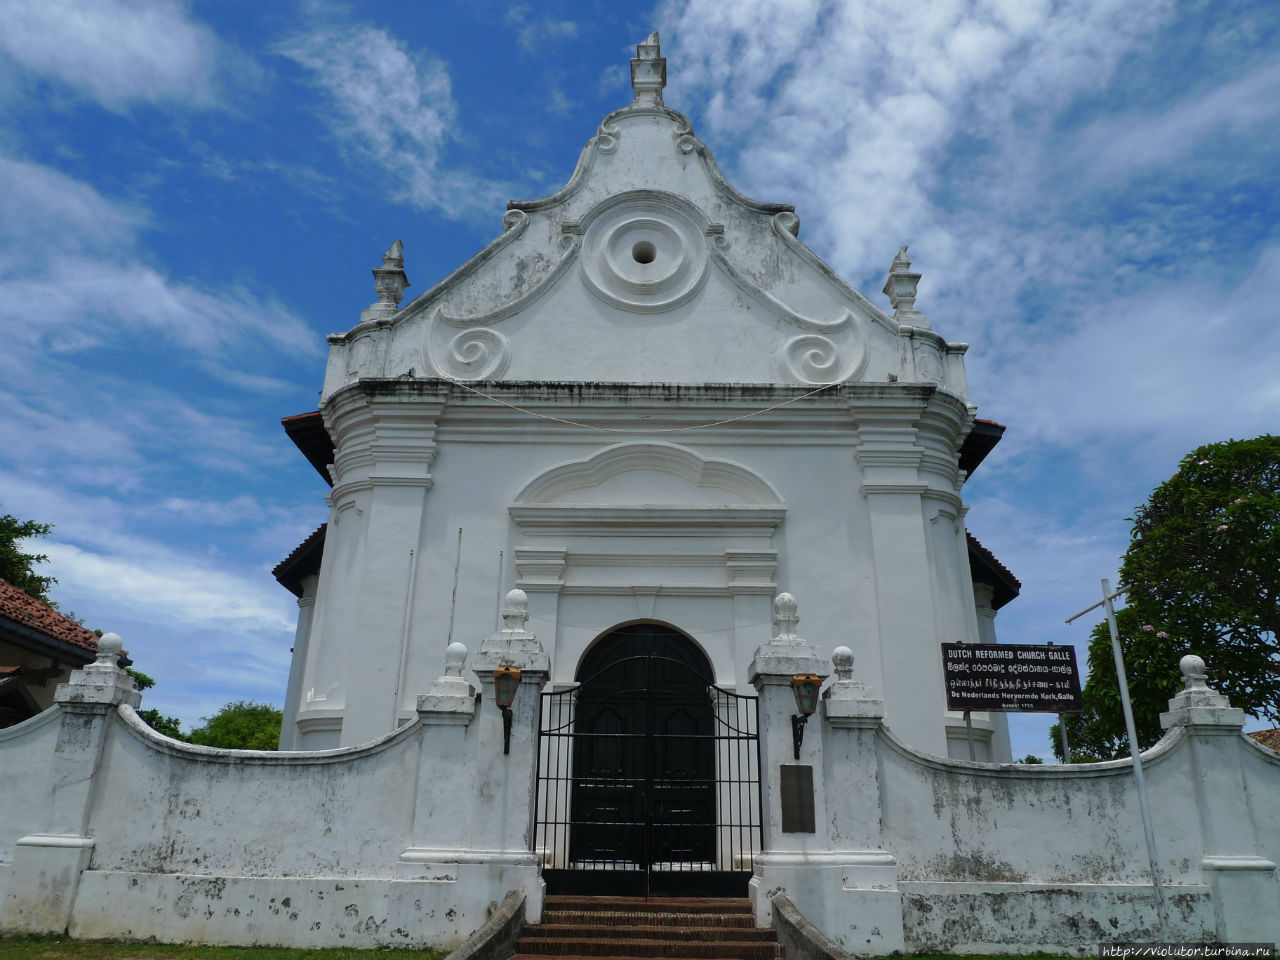 Форт Галле, солнце и очарование построек 17-го века Галле, Шри-Ланка